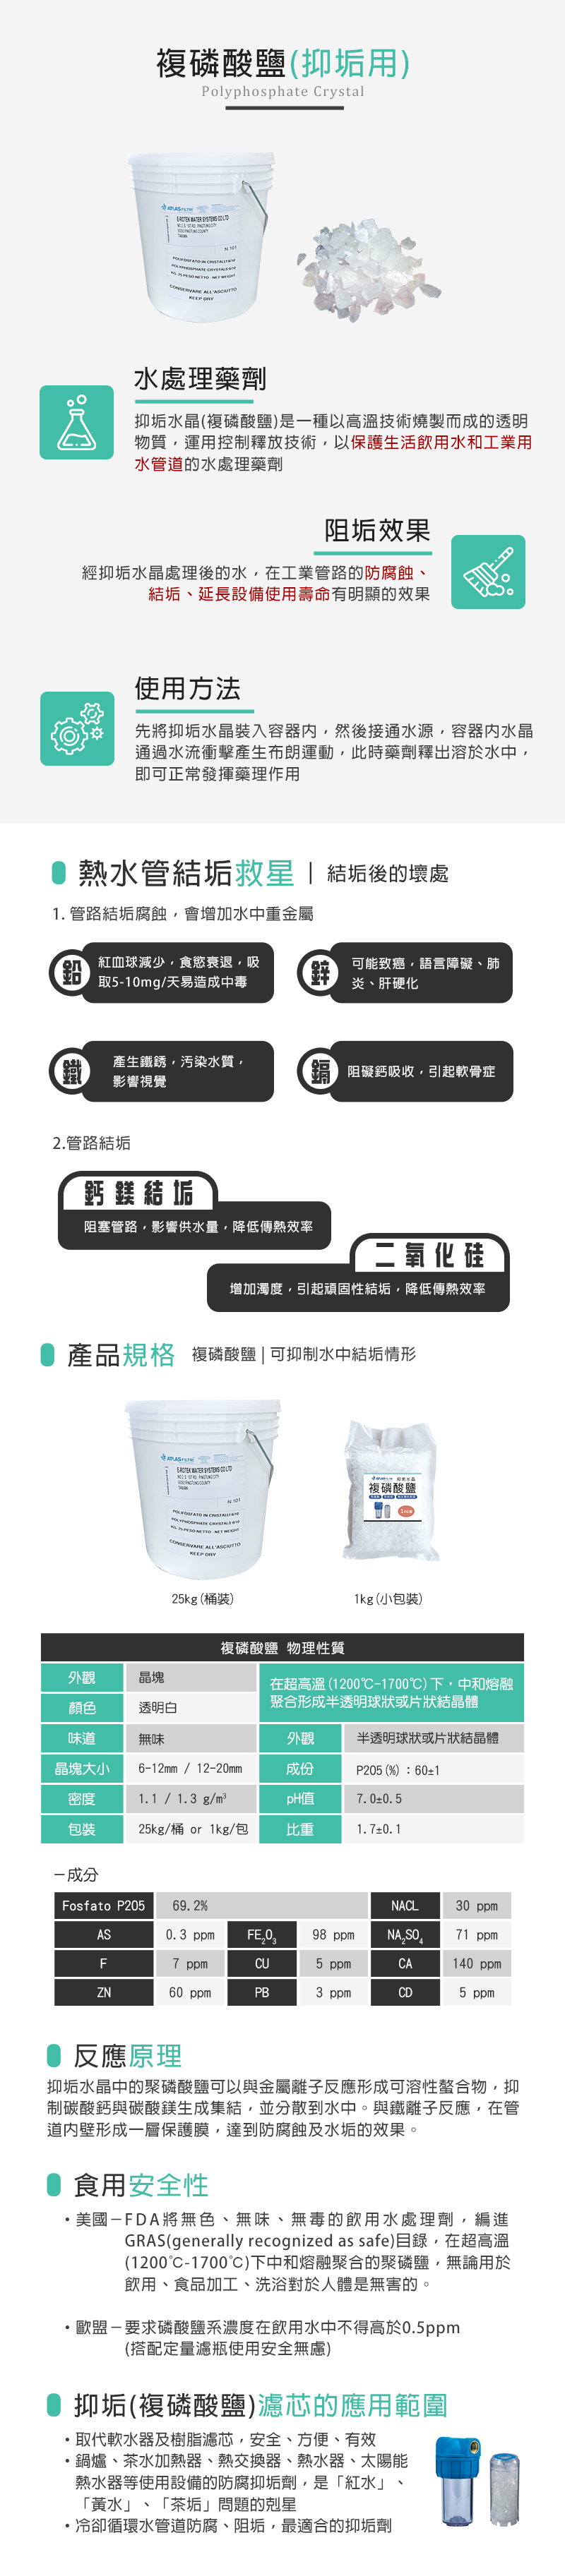 ATLAS複磷酸鹽(抑垢用)，取代樹脂濾芯及軟水器，使用週期長達半年